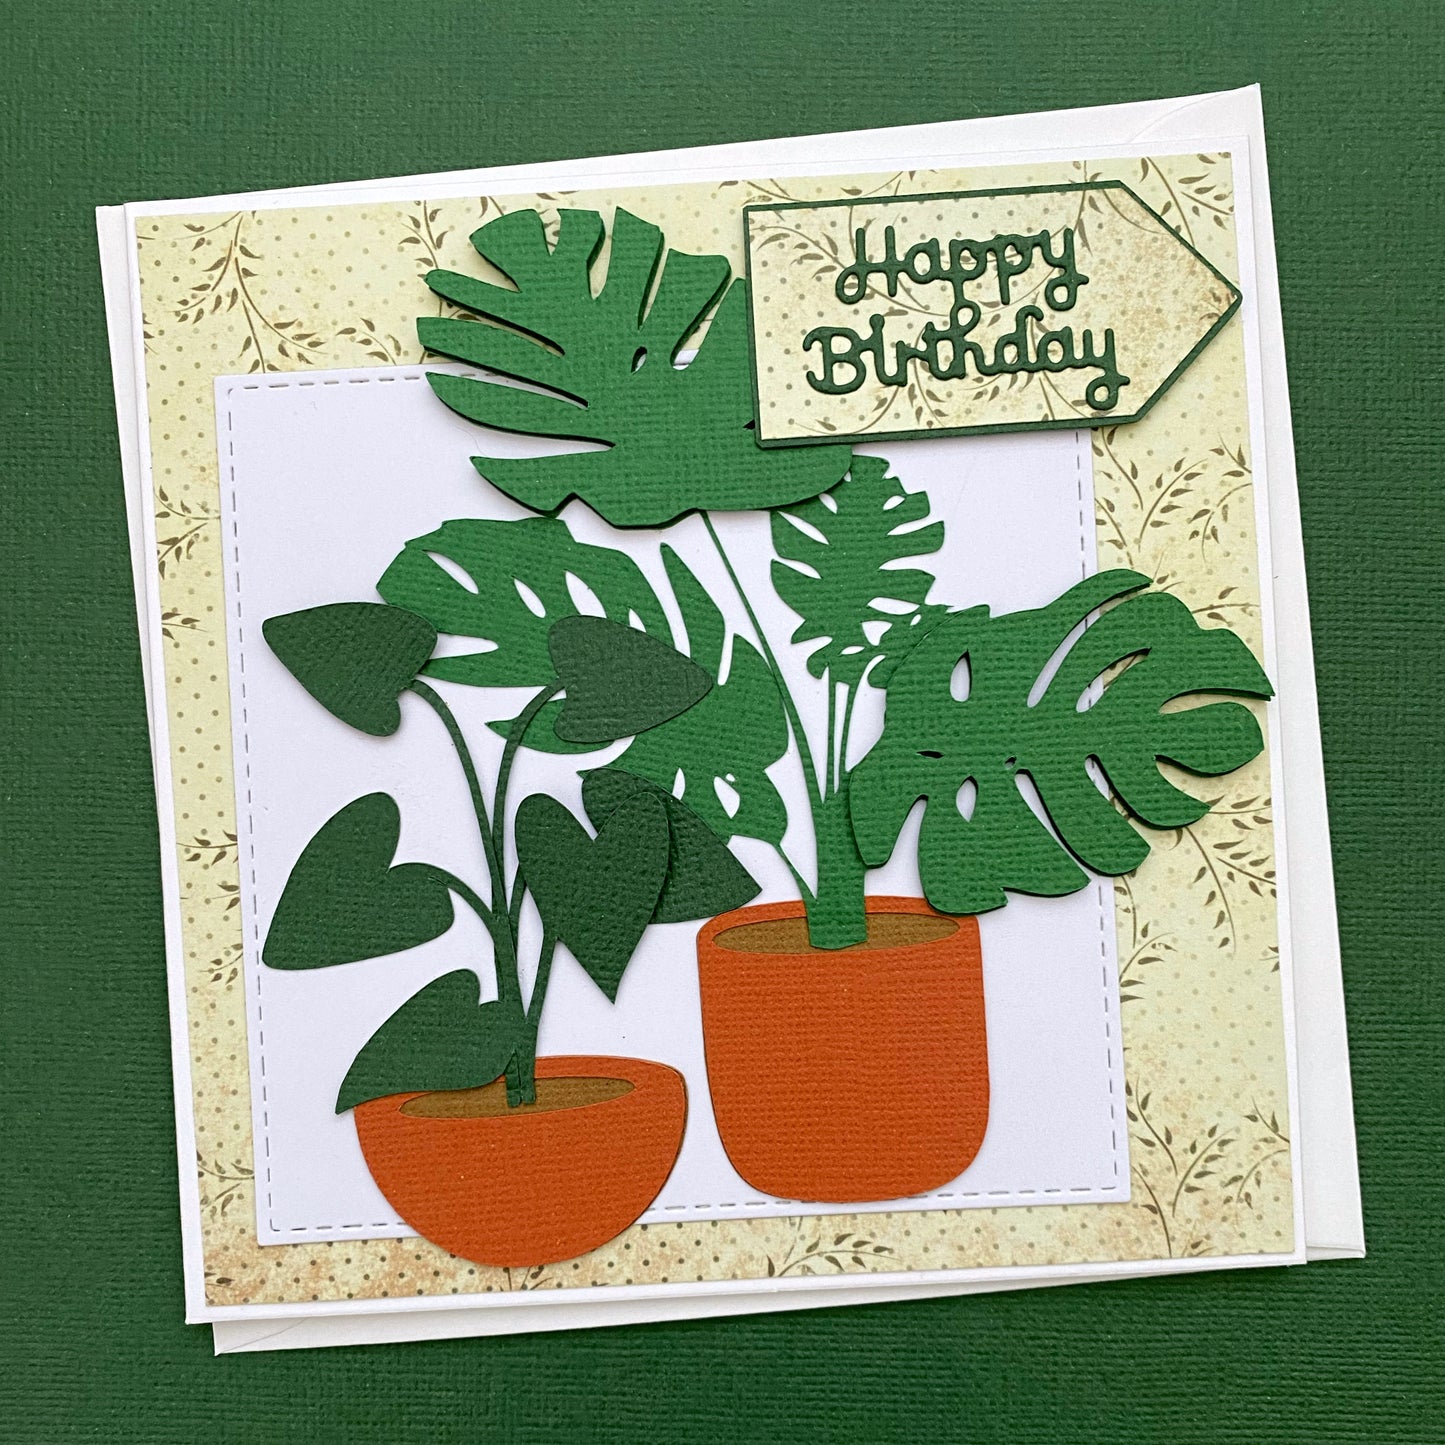 House plant card, birthday, greeting card.